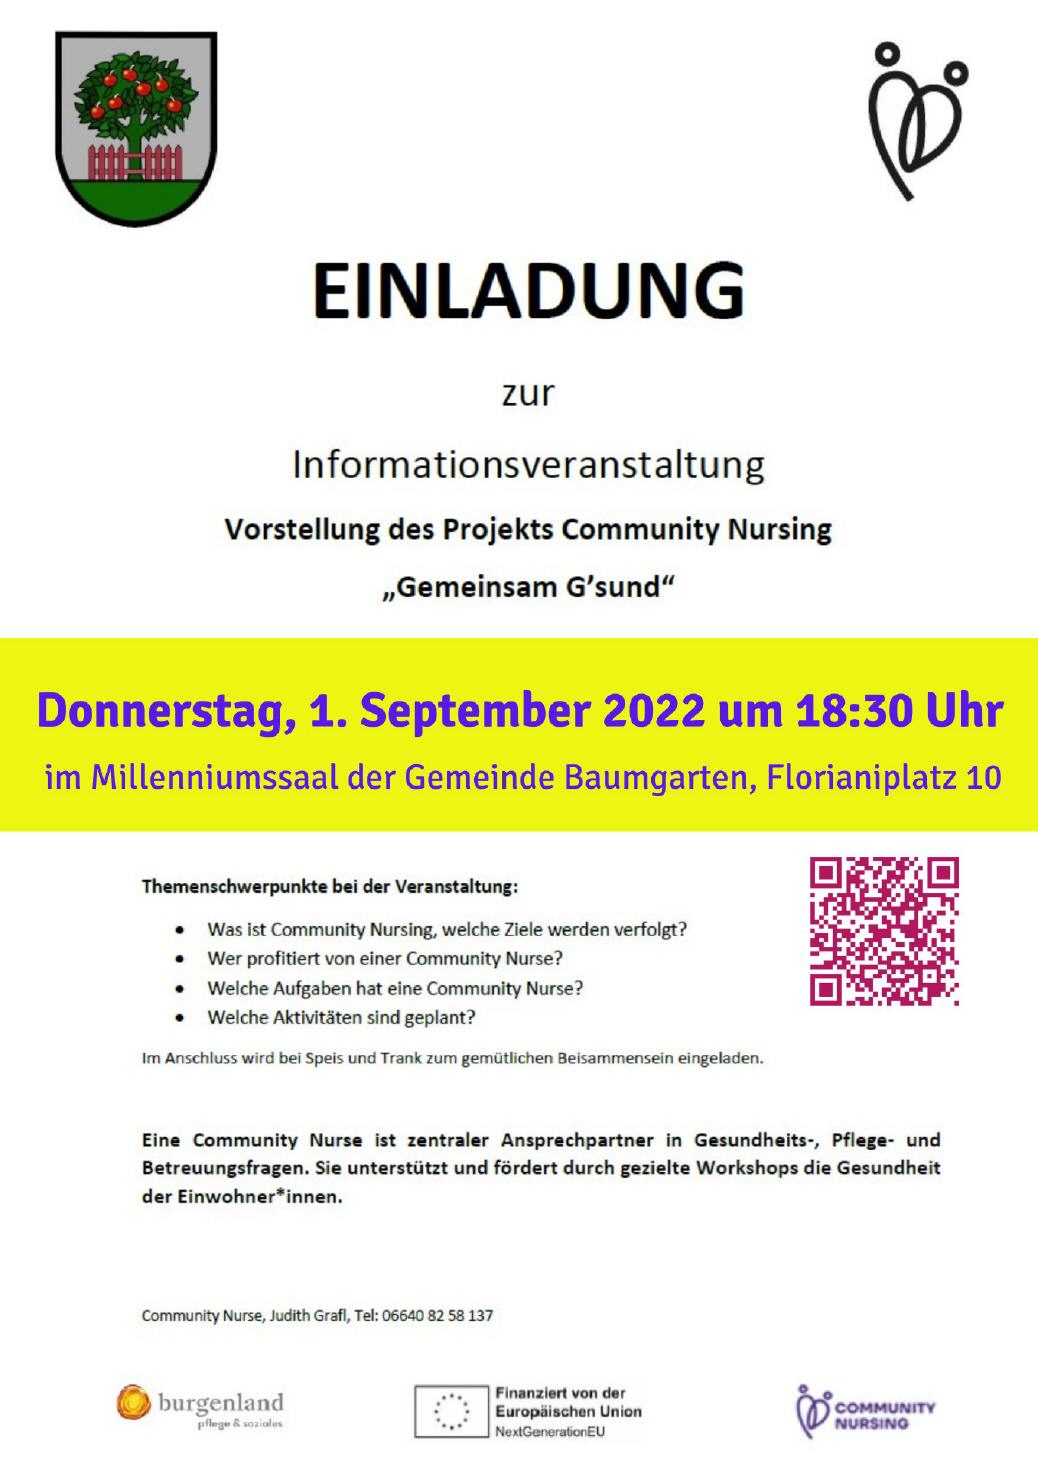 EINLADUNG - Community Nursing - INFOABEND